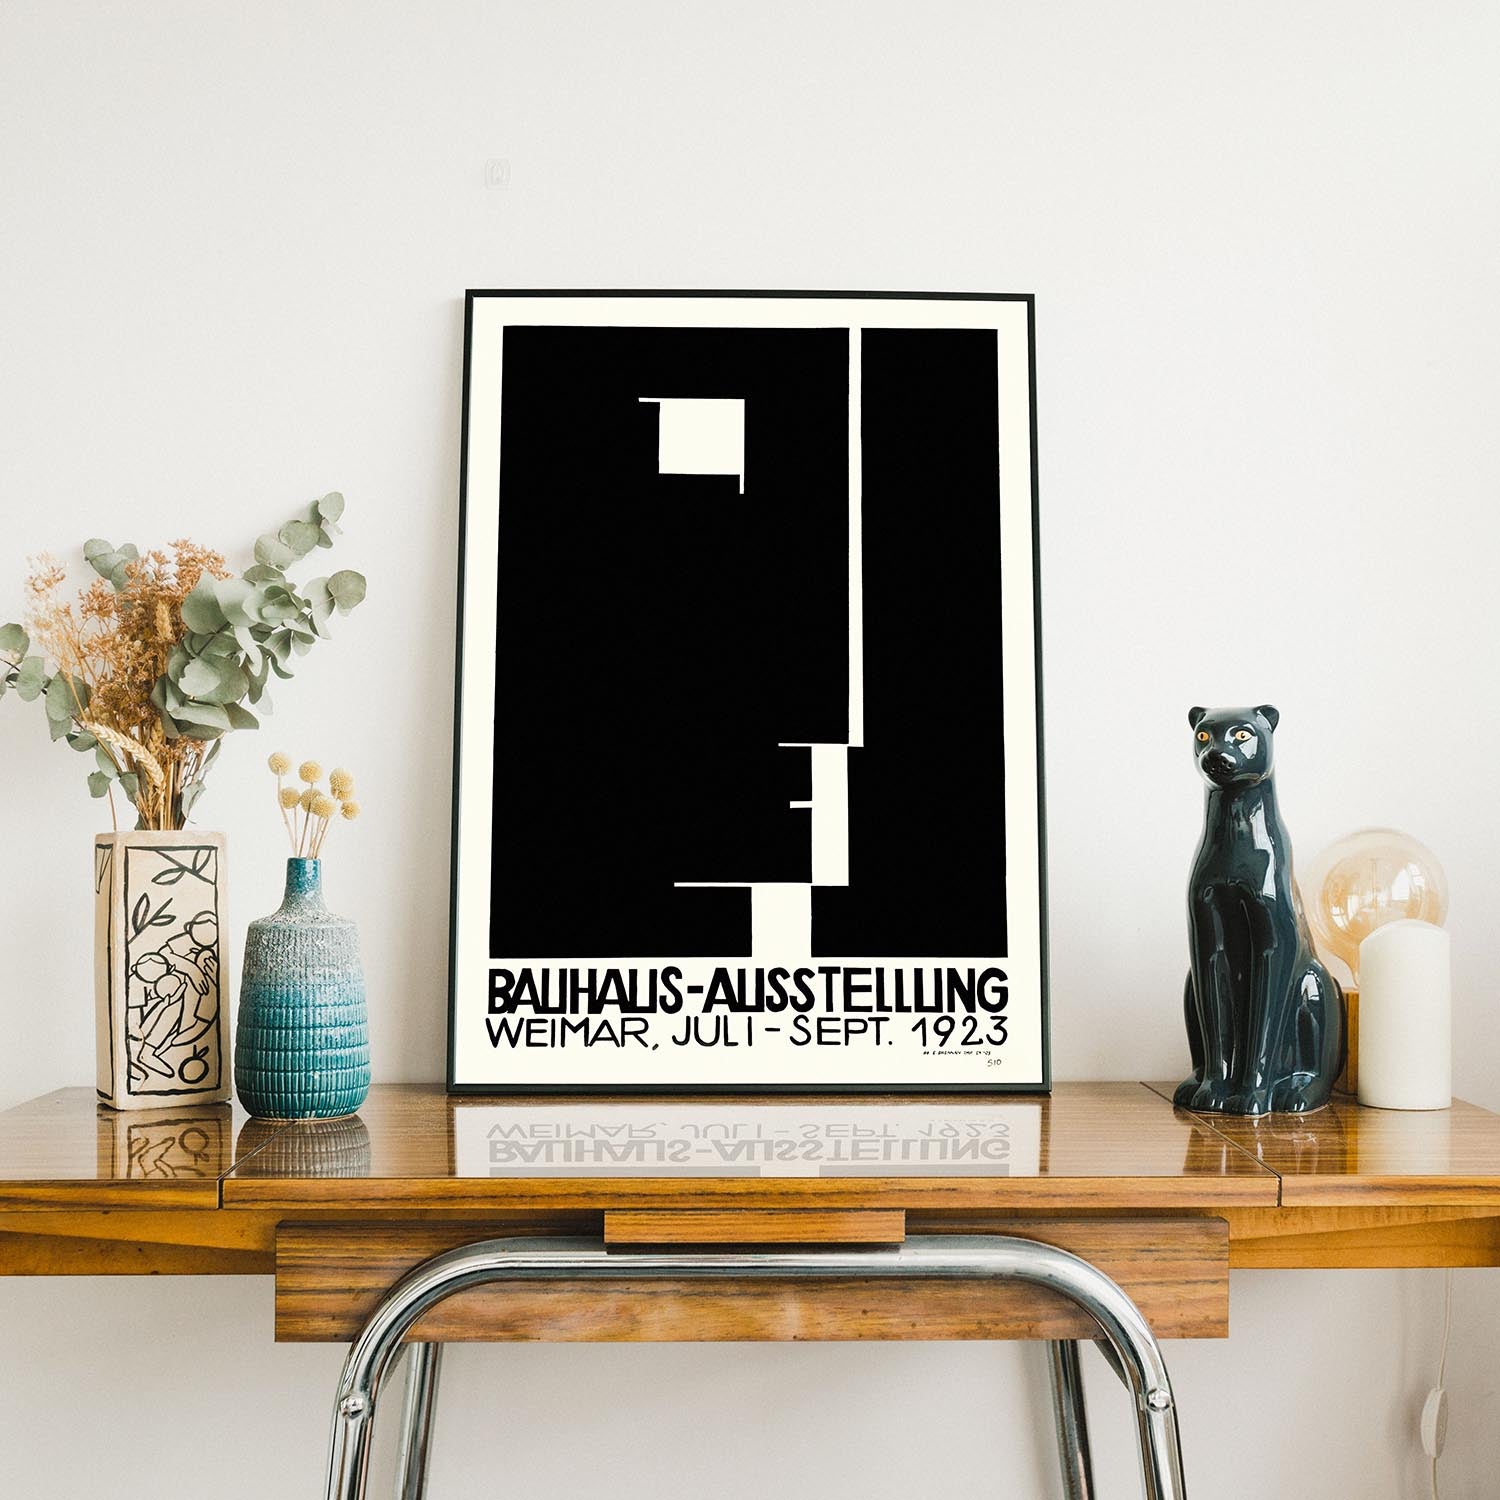 Bauhaus weimar logo poster